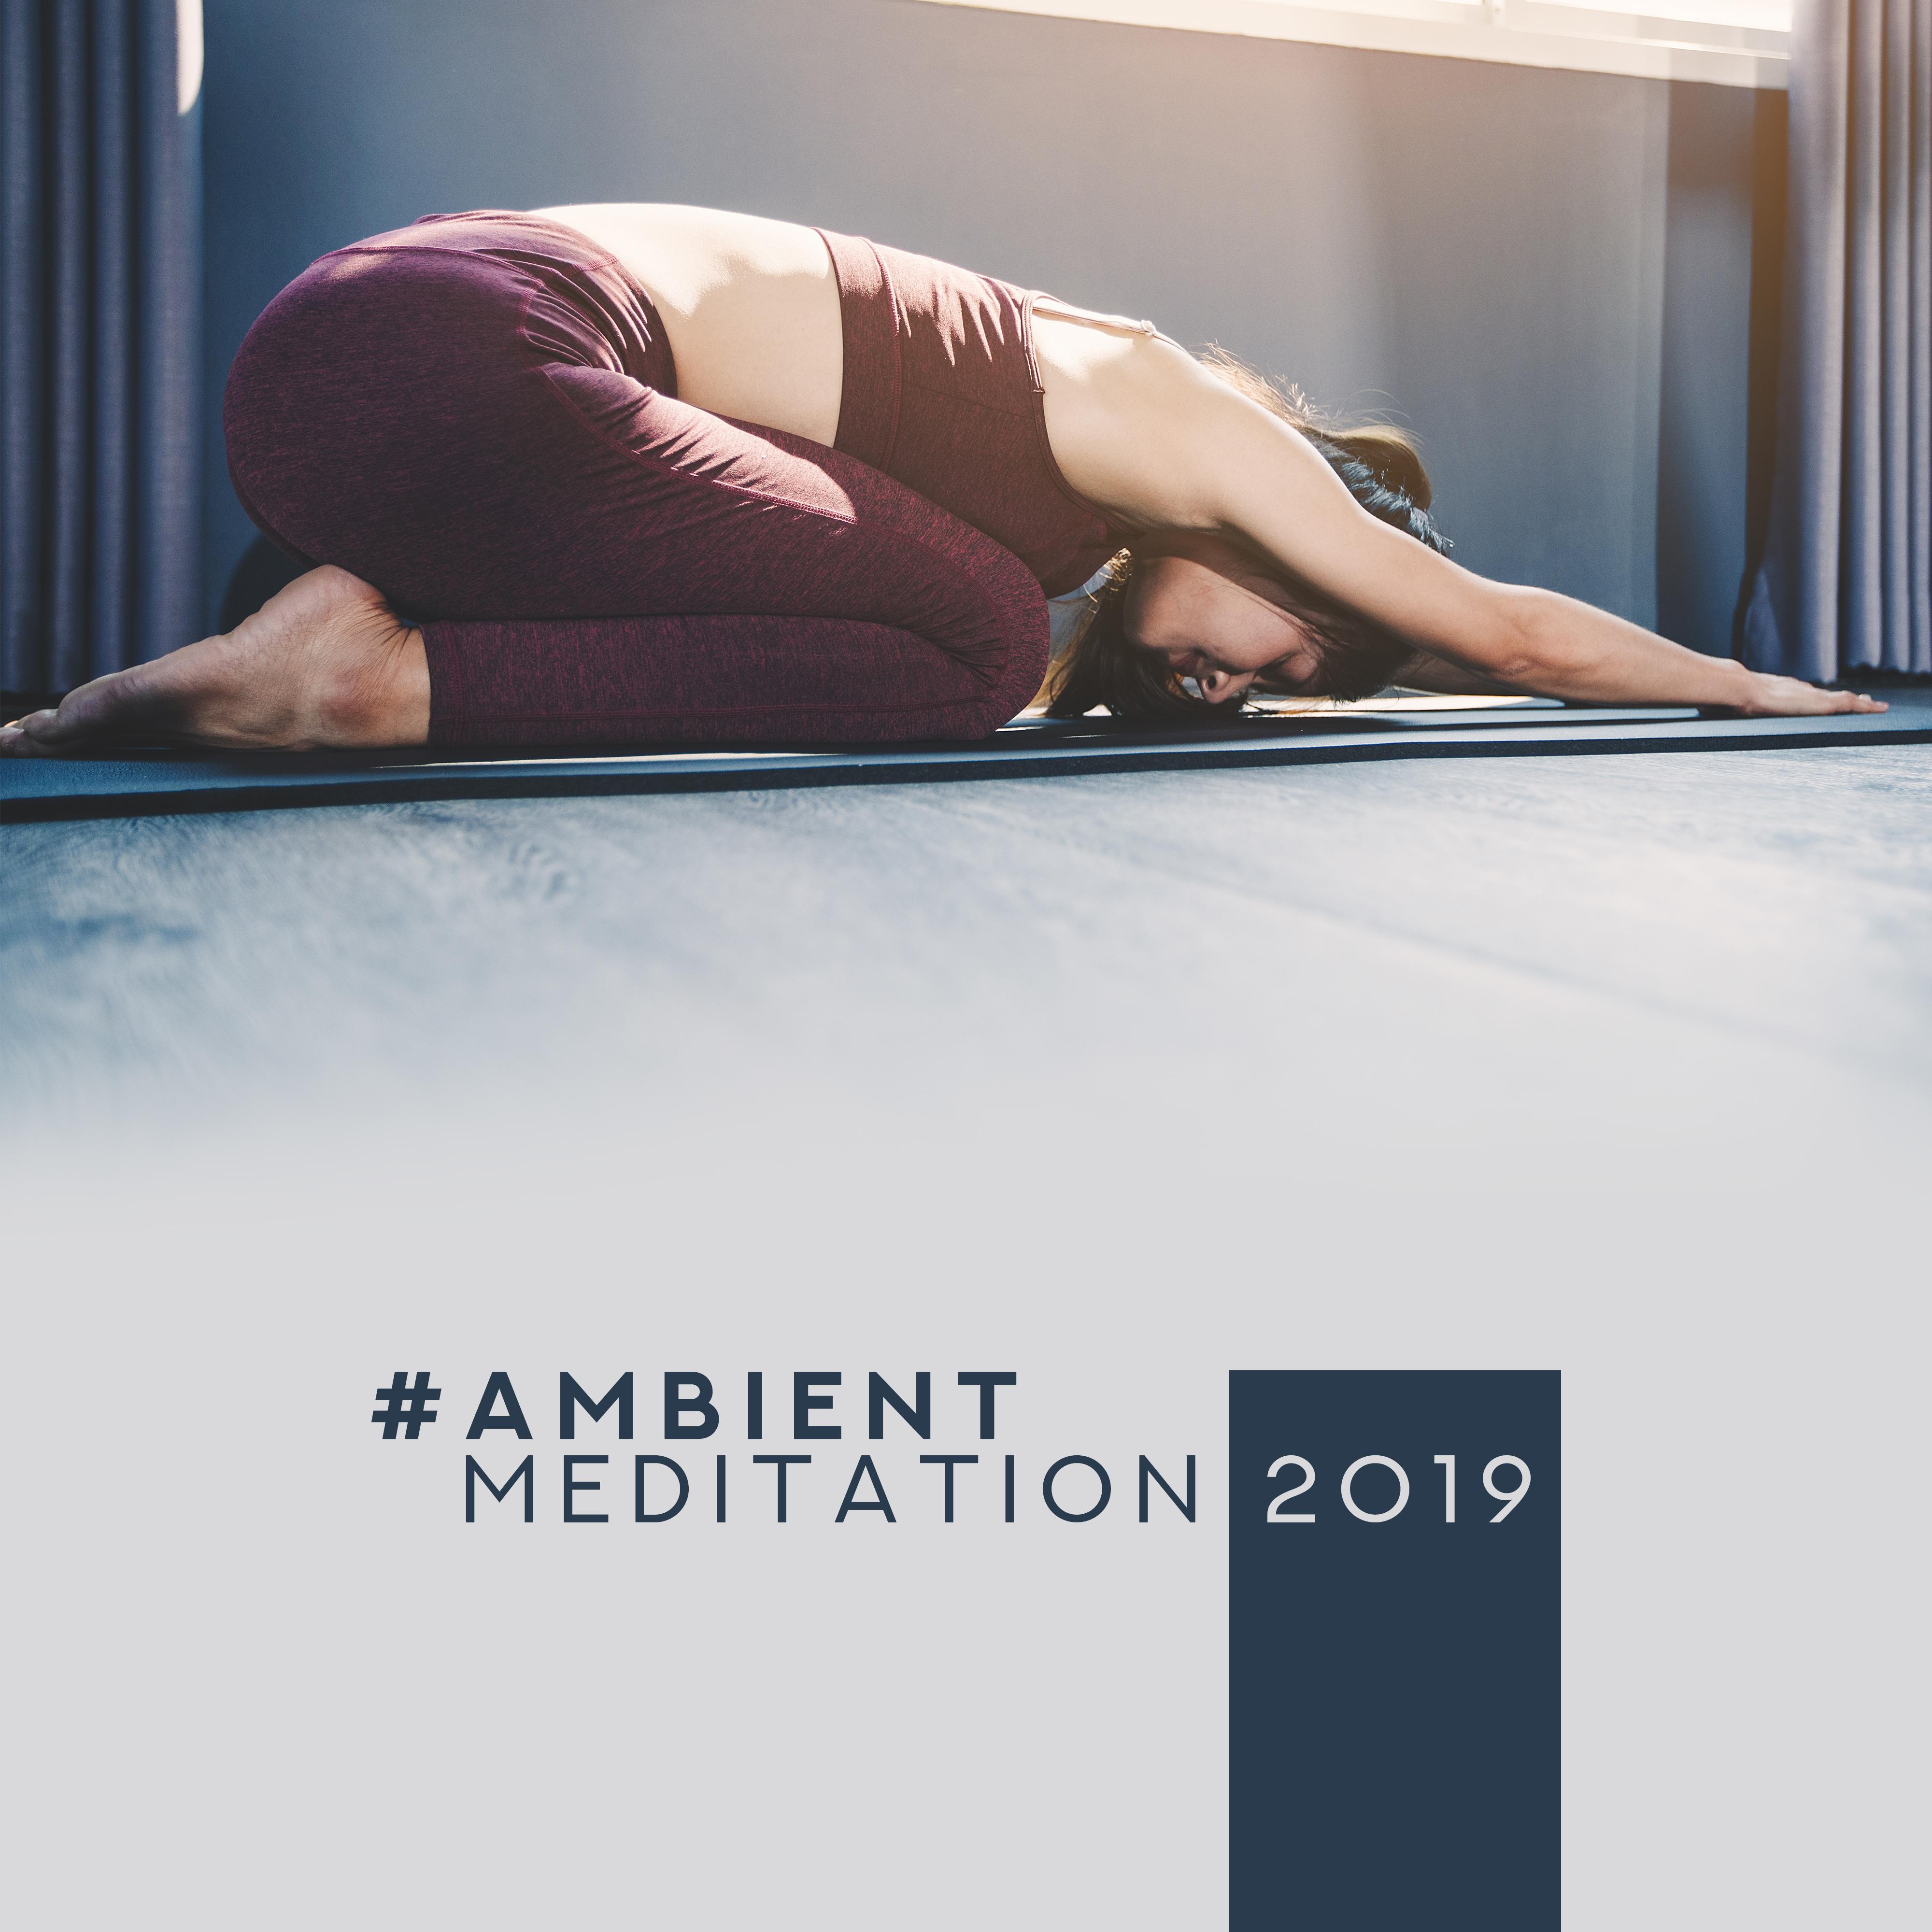 #Ambient Meditation 2019 – Yoga Music to Rest, Spiritual Awakening, Meditation Music Zone, Chakra Balancing, Zen Serenity, Reiki